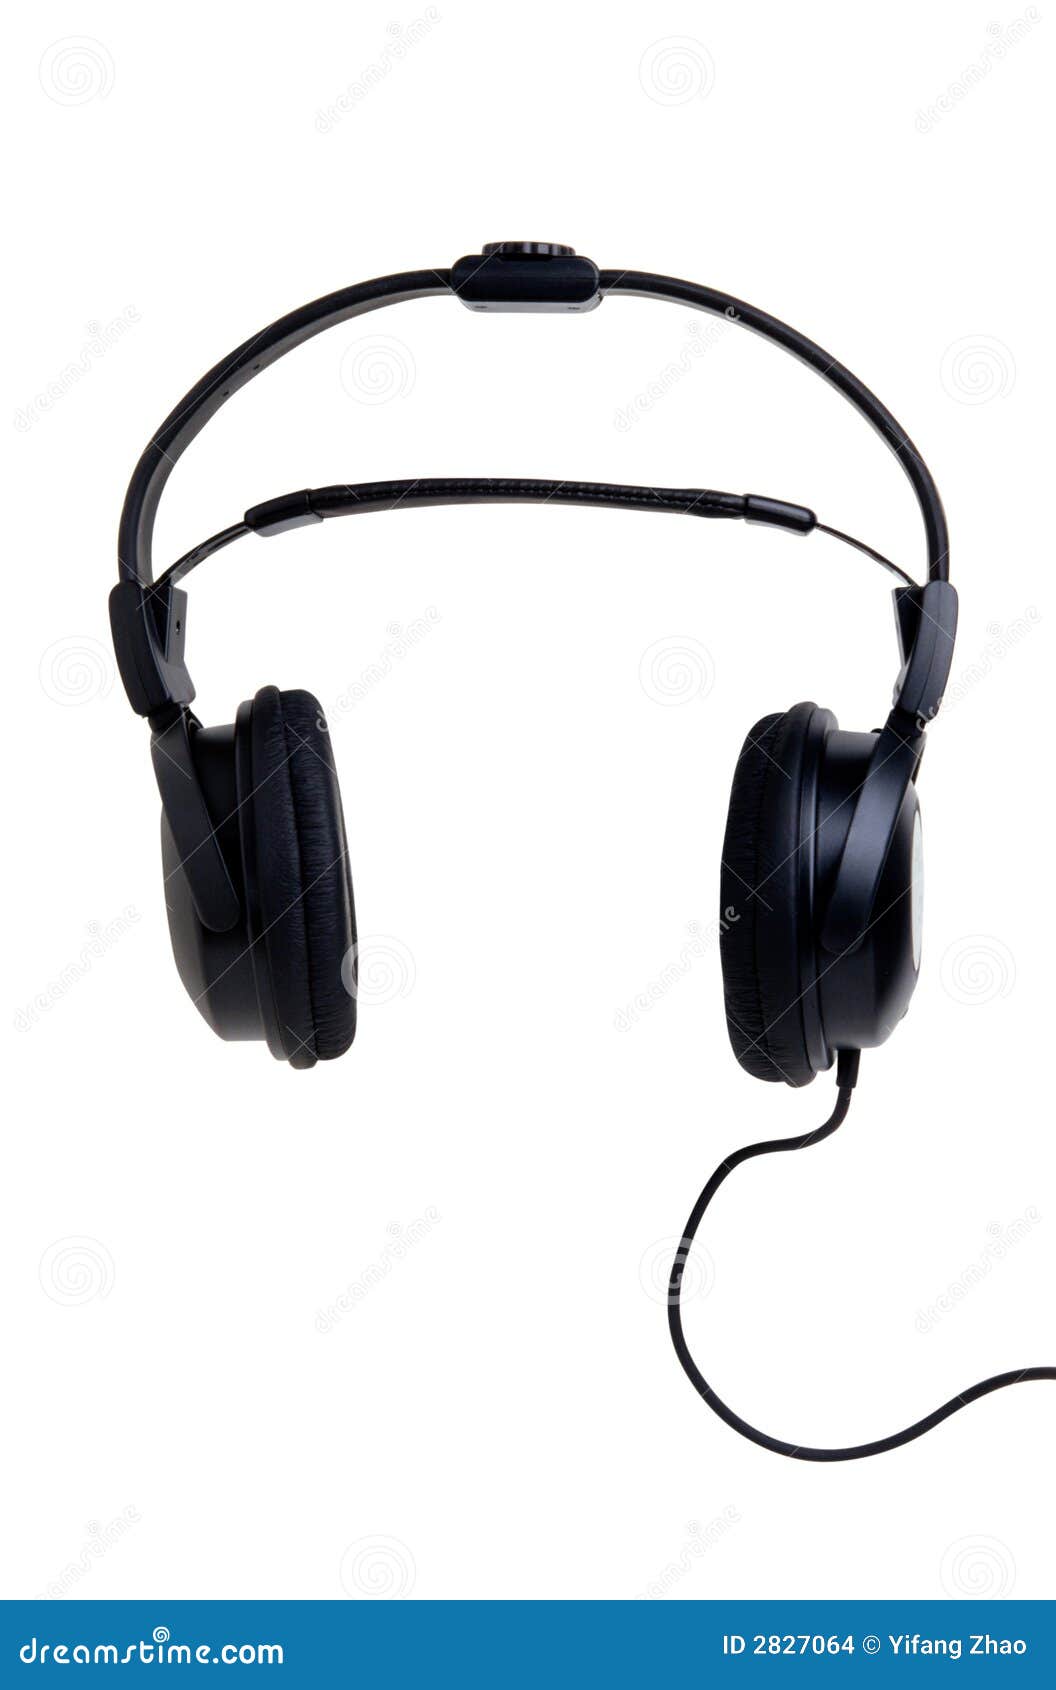 earphone